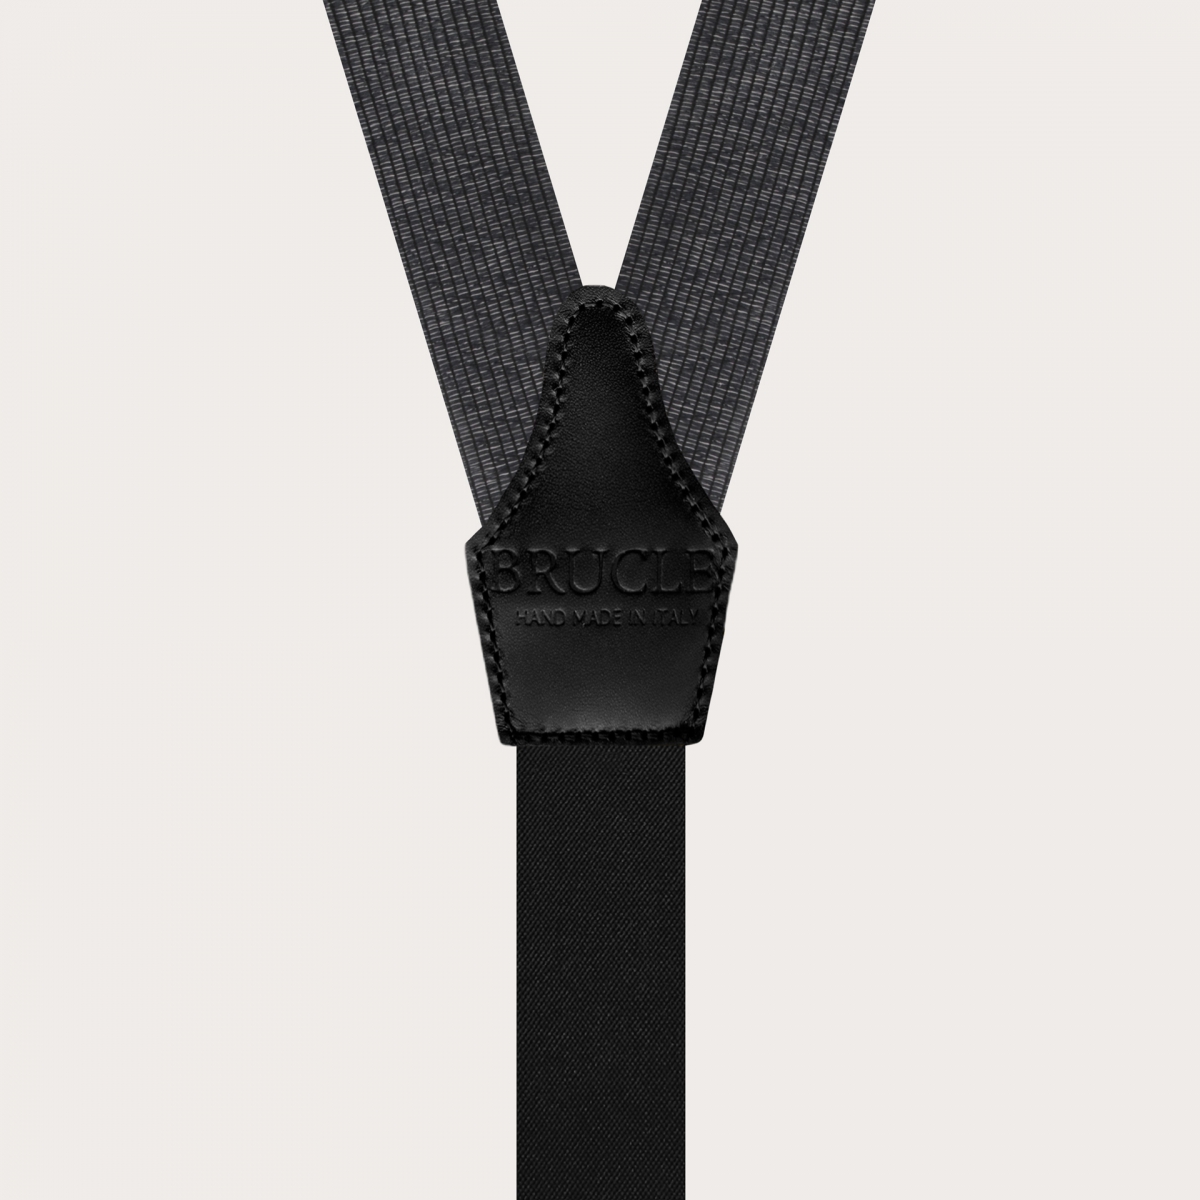 BRUCLE Elegant black and silver melange silk suspenders with buttonholes